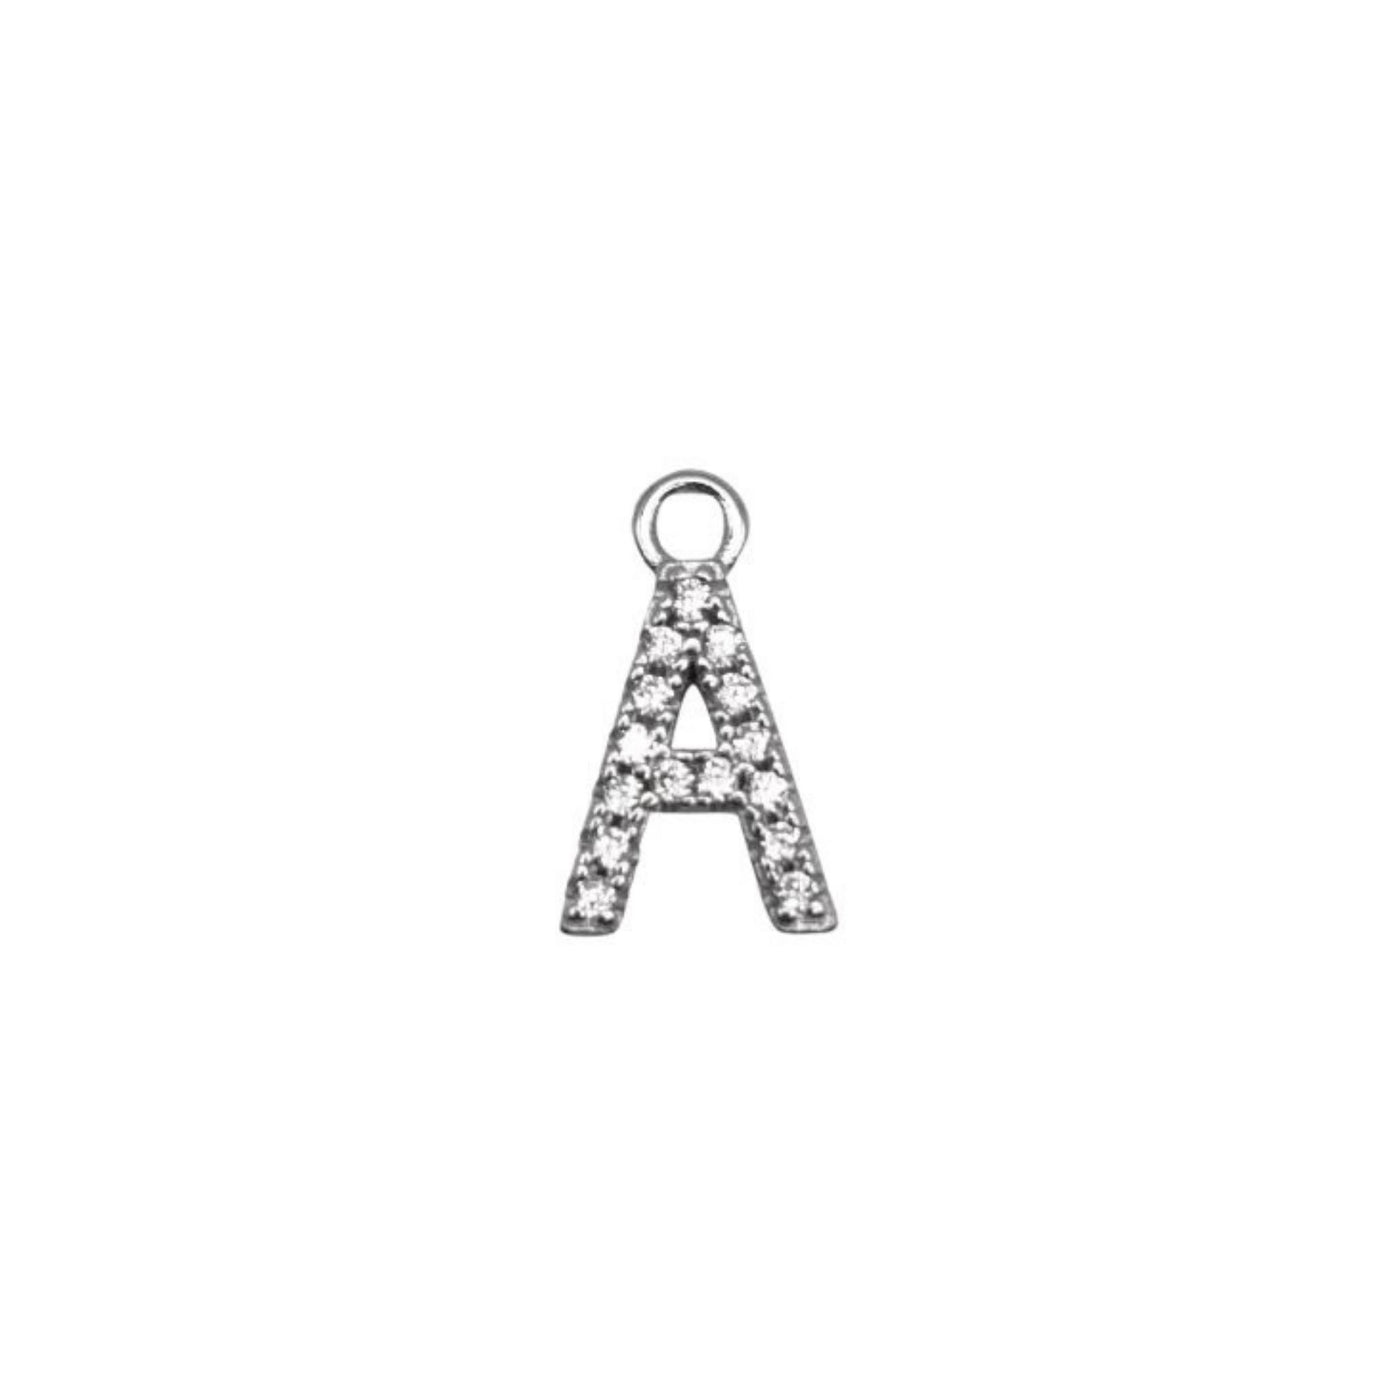 Pack of 5 Alphabet letter pendants in silver - 9 mm